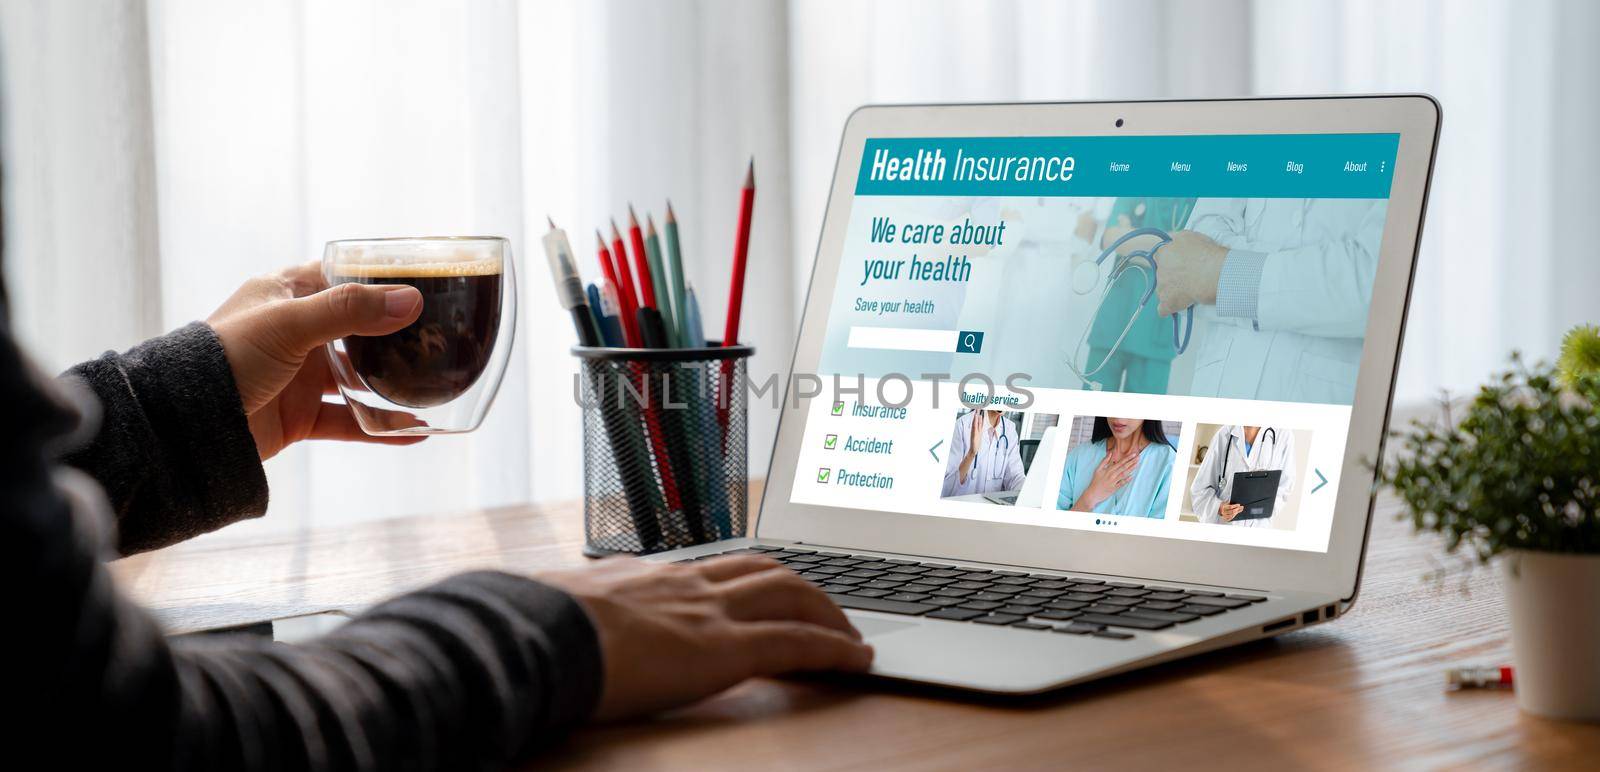 Health insurance web site modish registration system by biancoblue